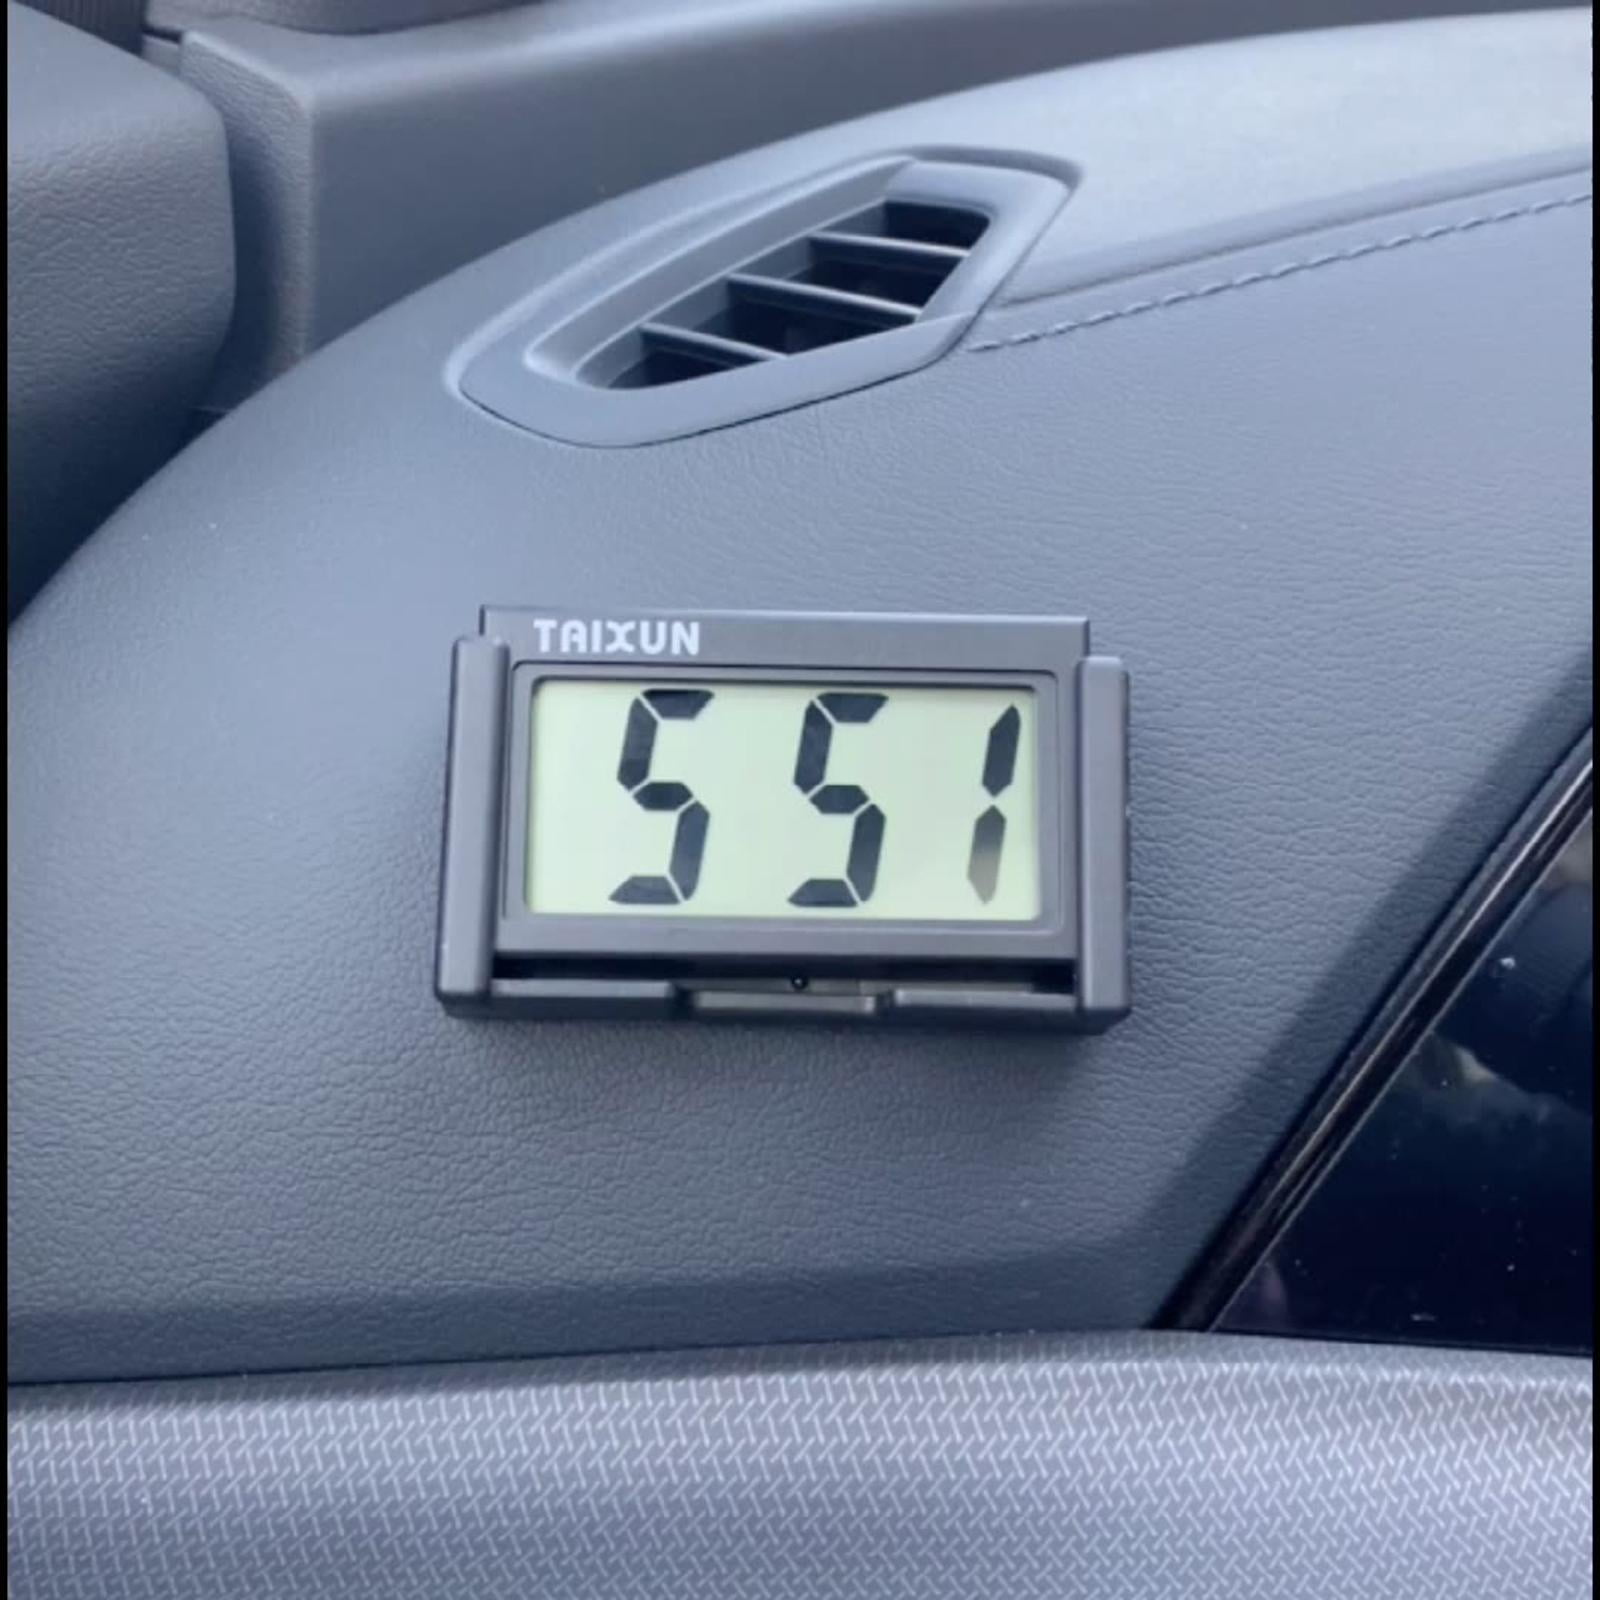 Mini Car Clock, Auto Dashboard Time, Electronic Digital Clock, Portable 